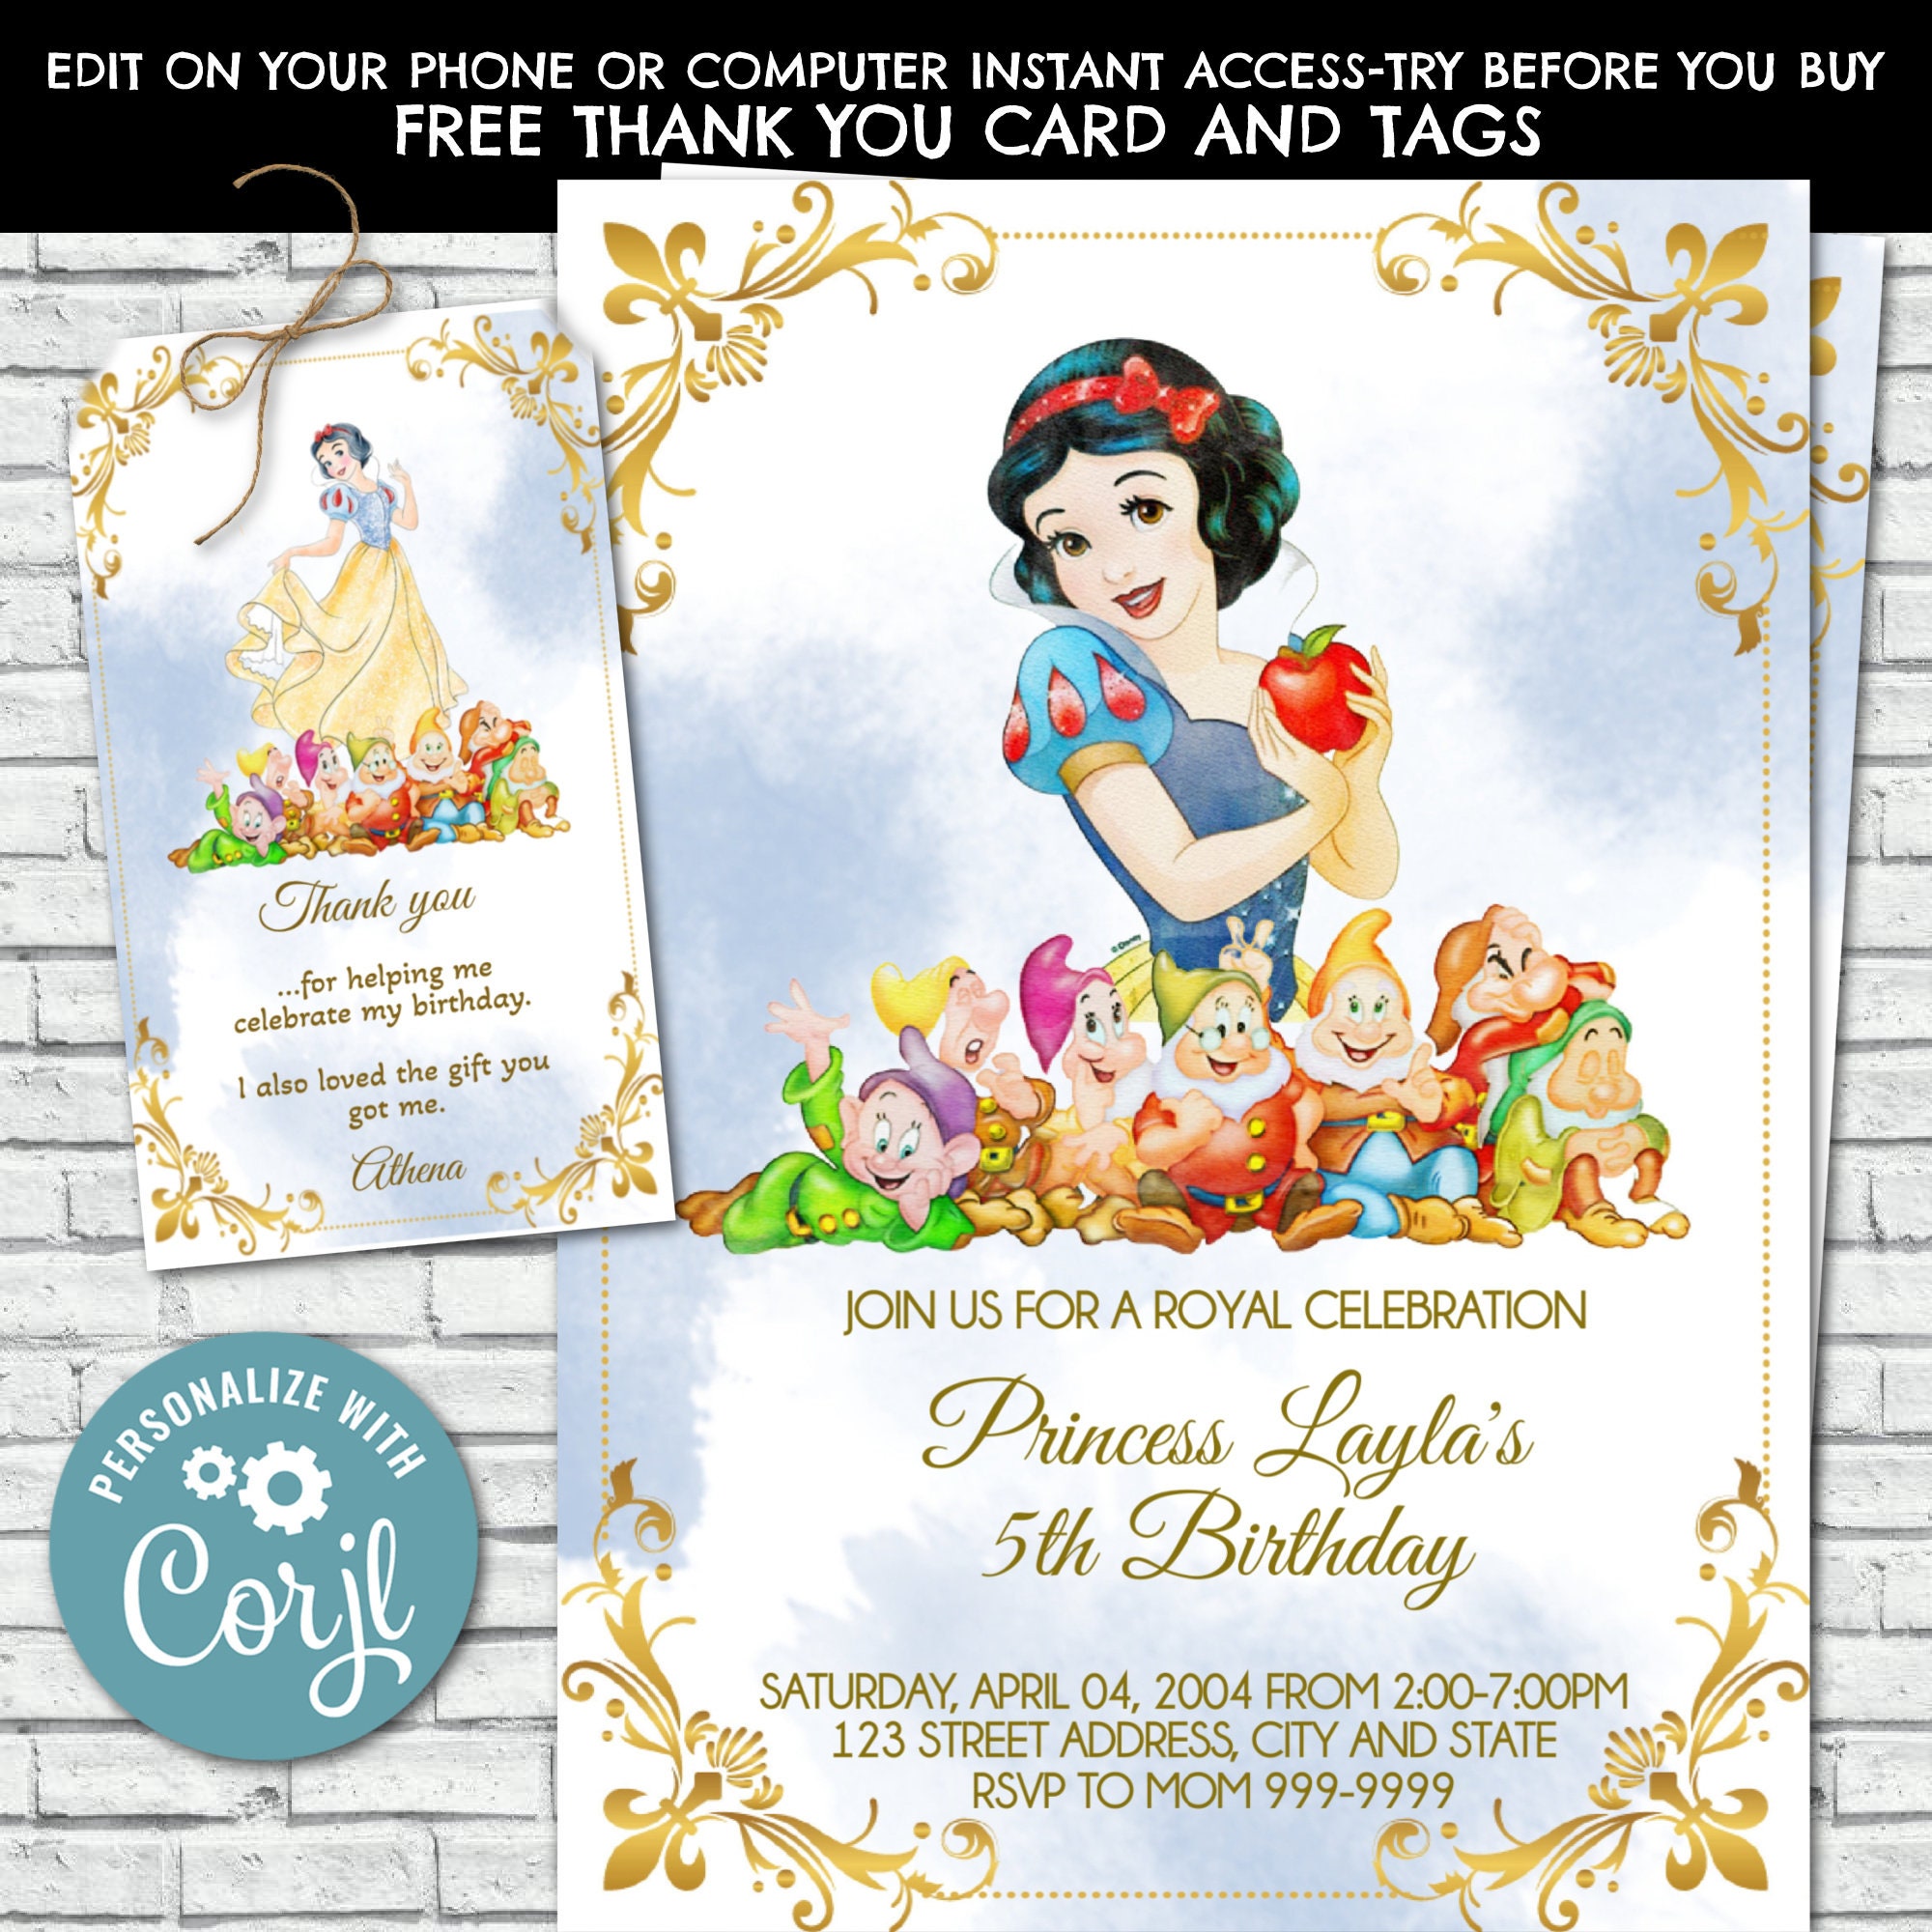 Snow White Party Decorations, Snow White 3d Letter, Snow White